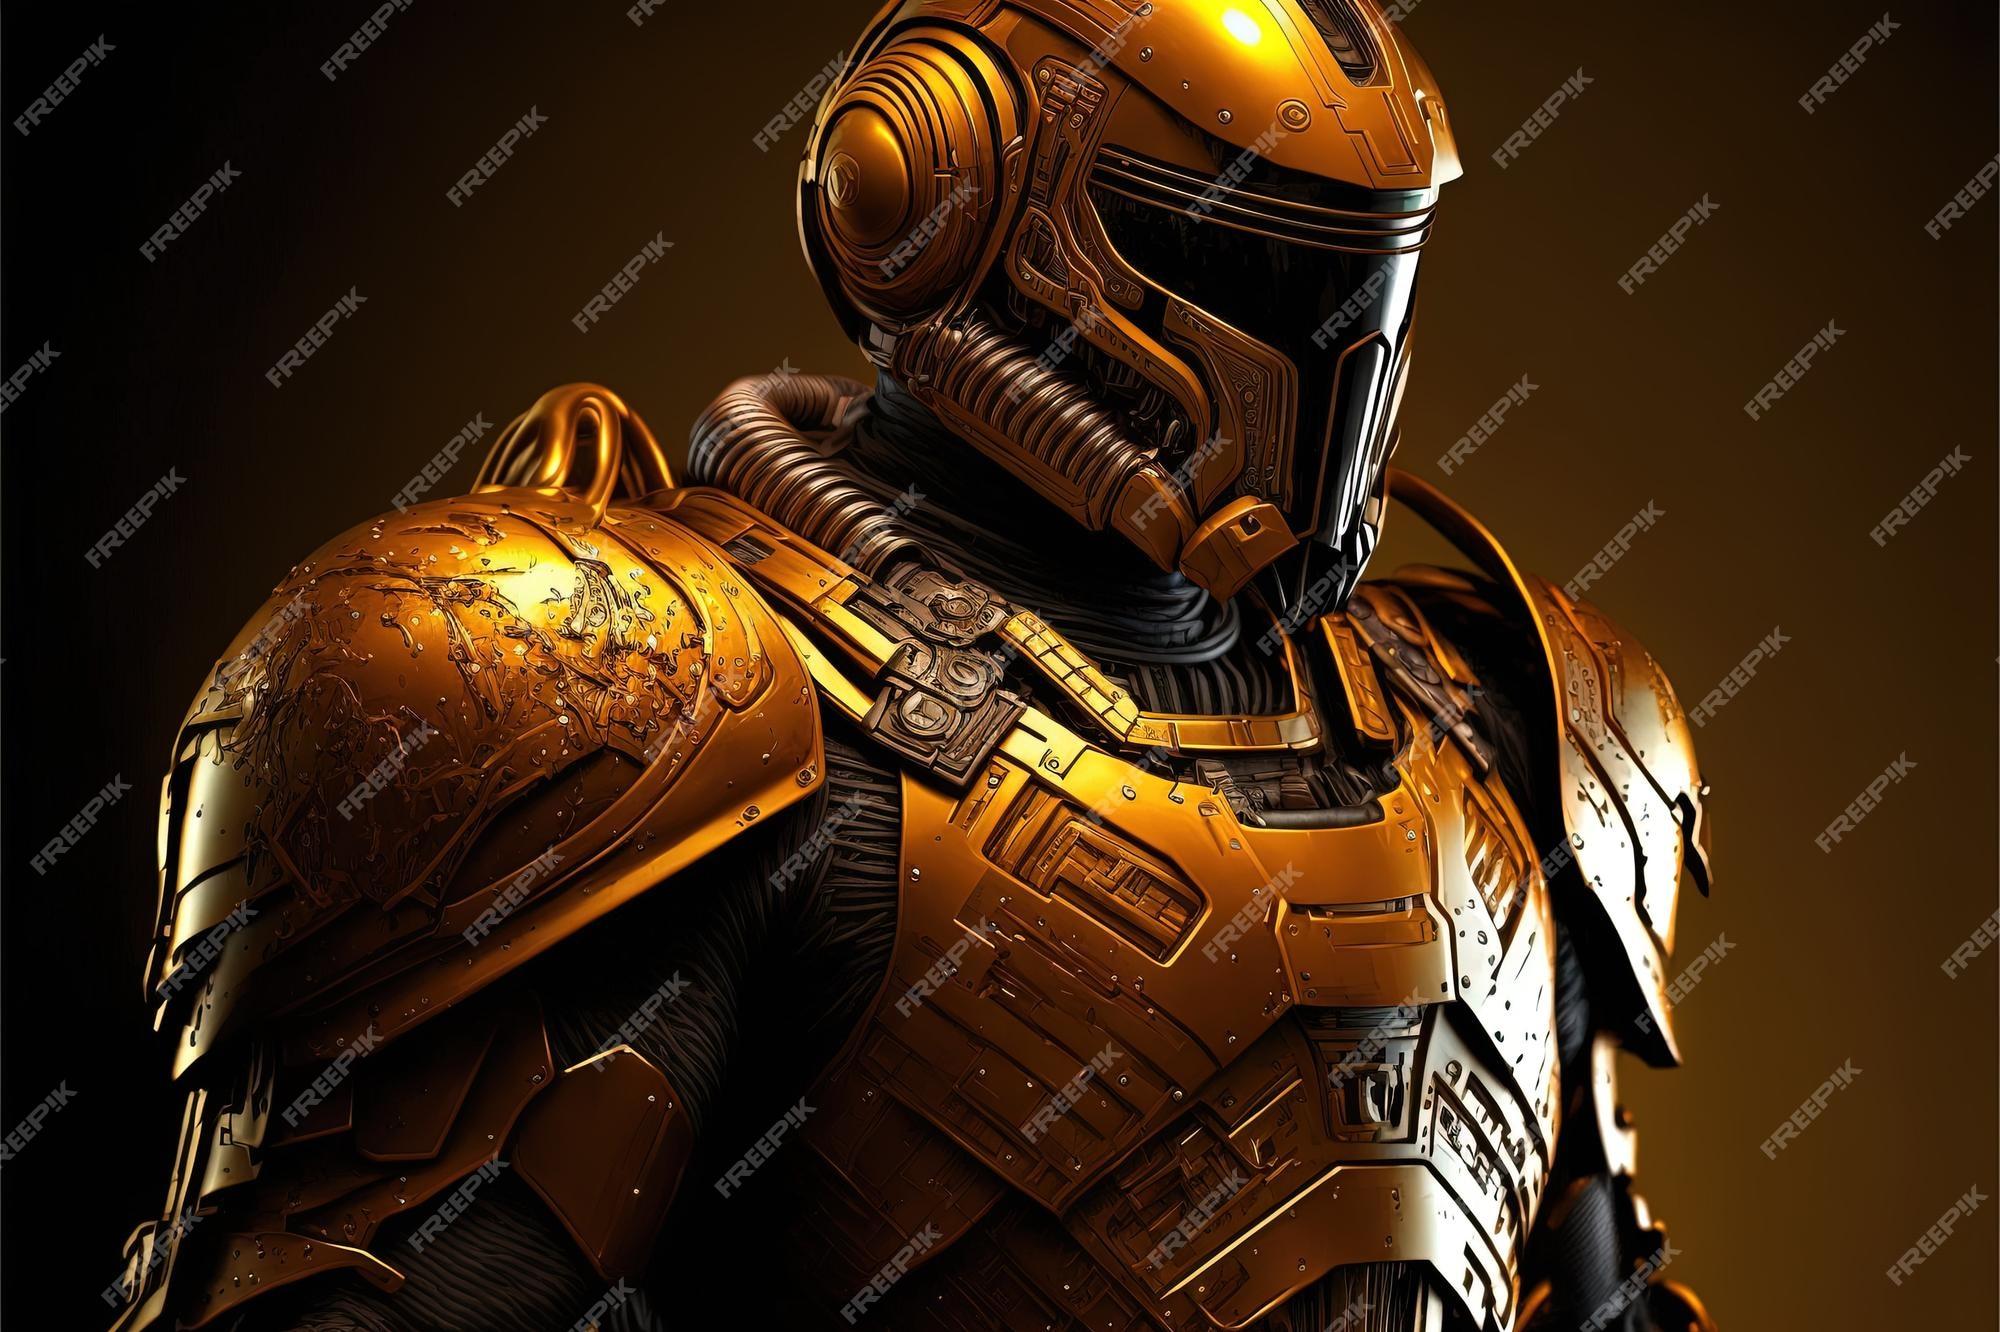 Premium Photo Elite Space Soldier In A Golden Helmet And Armor